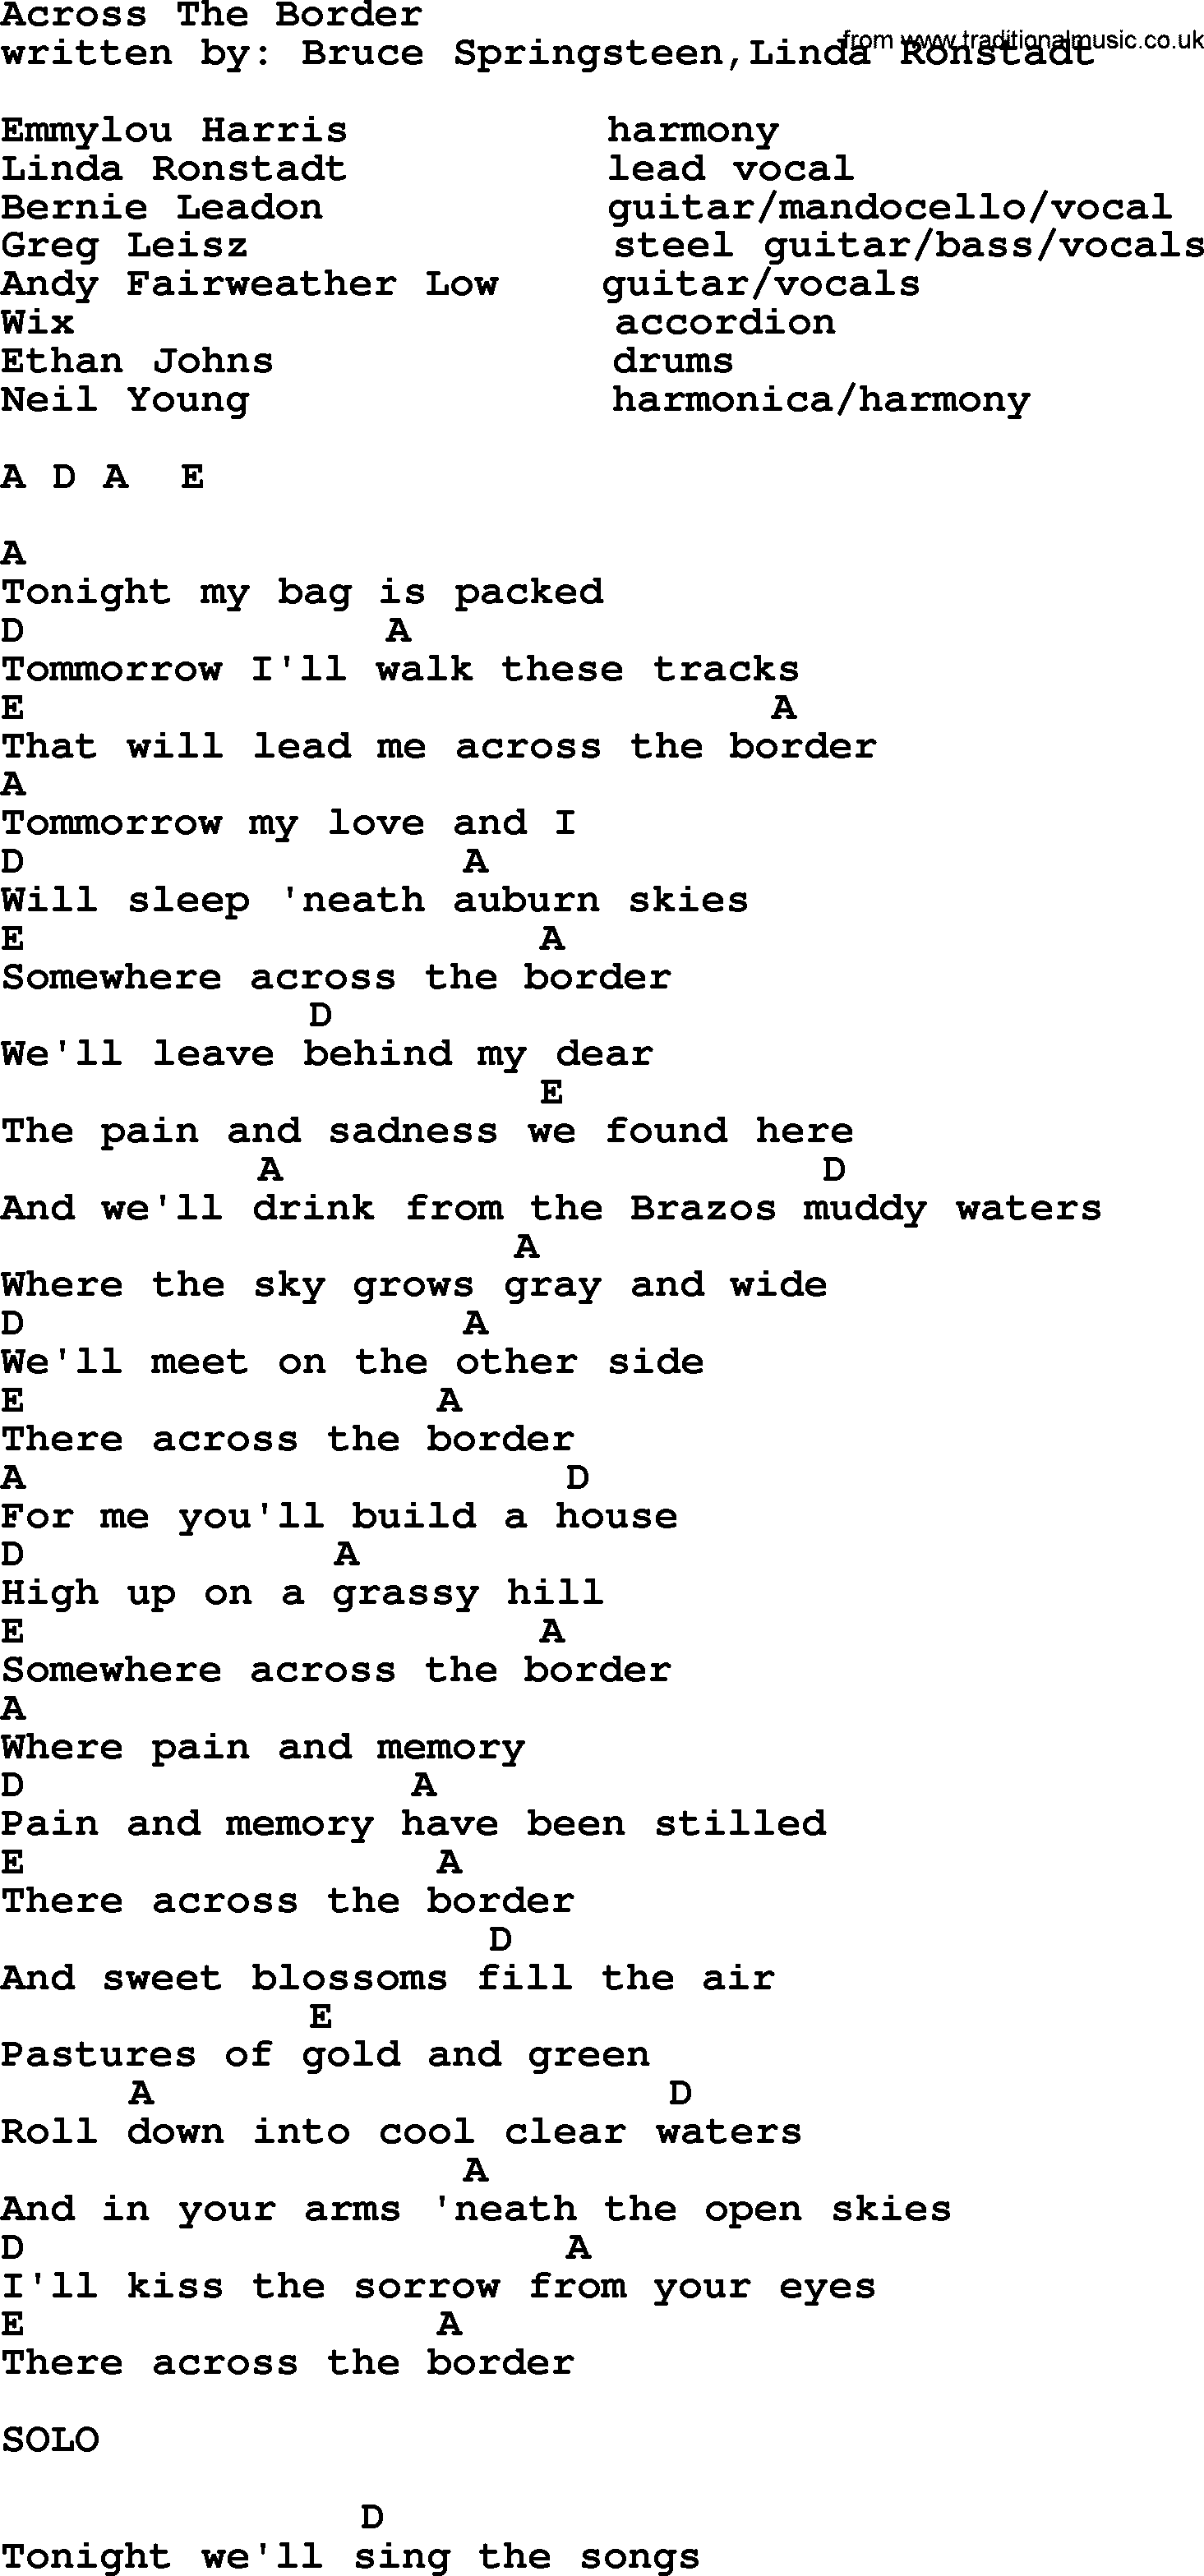 Emmylou Harris song: Across The Border lyrics and chords